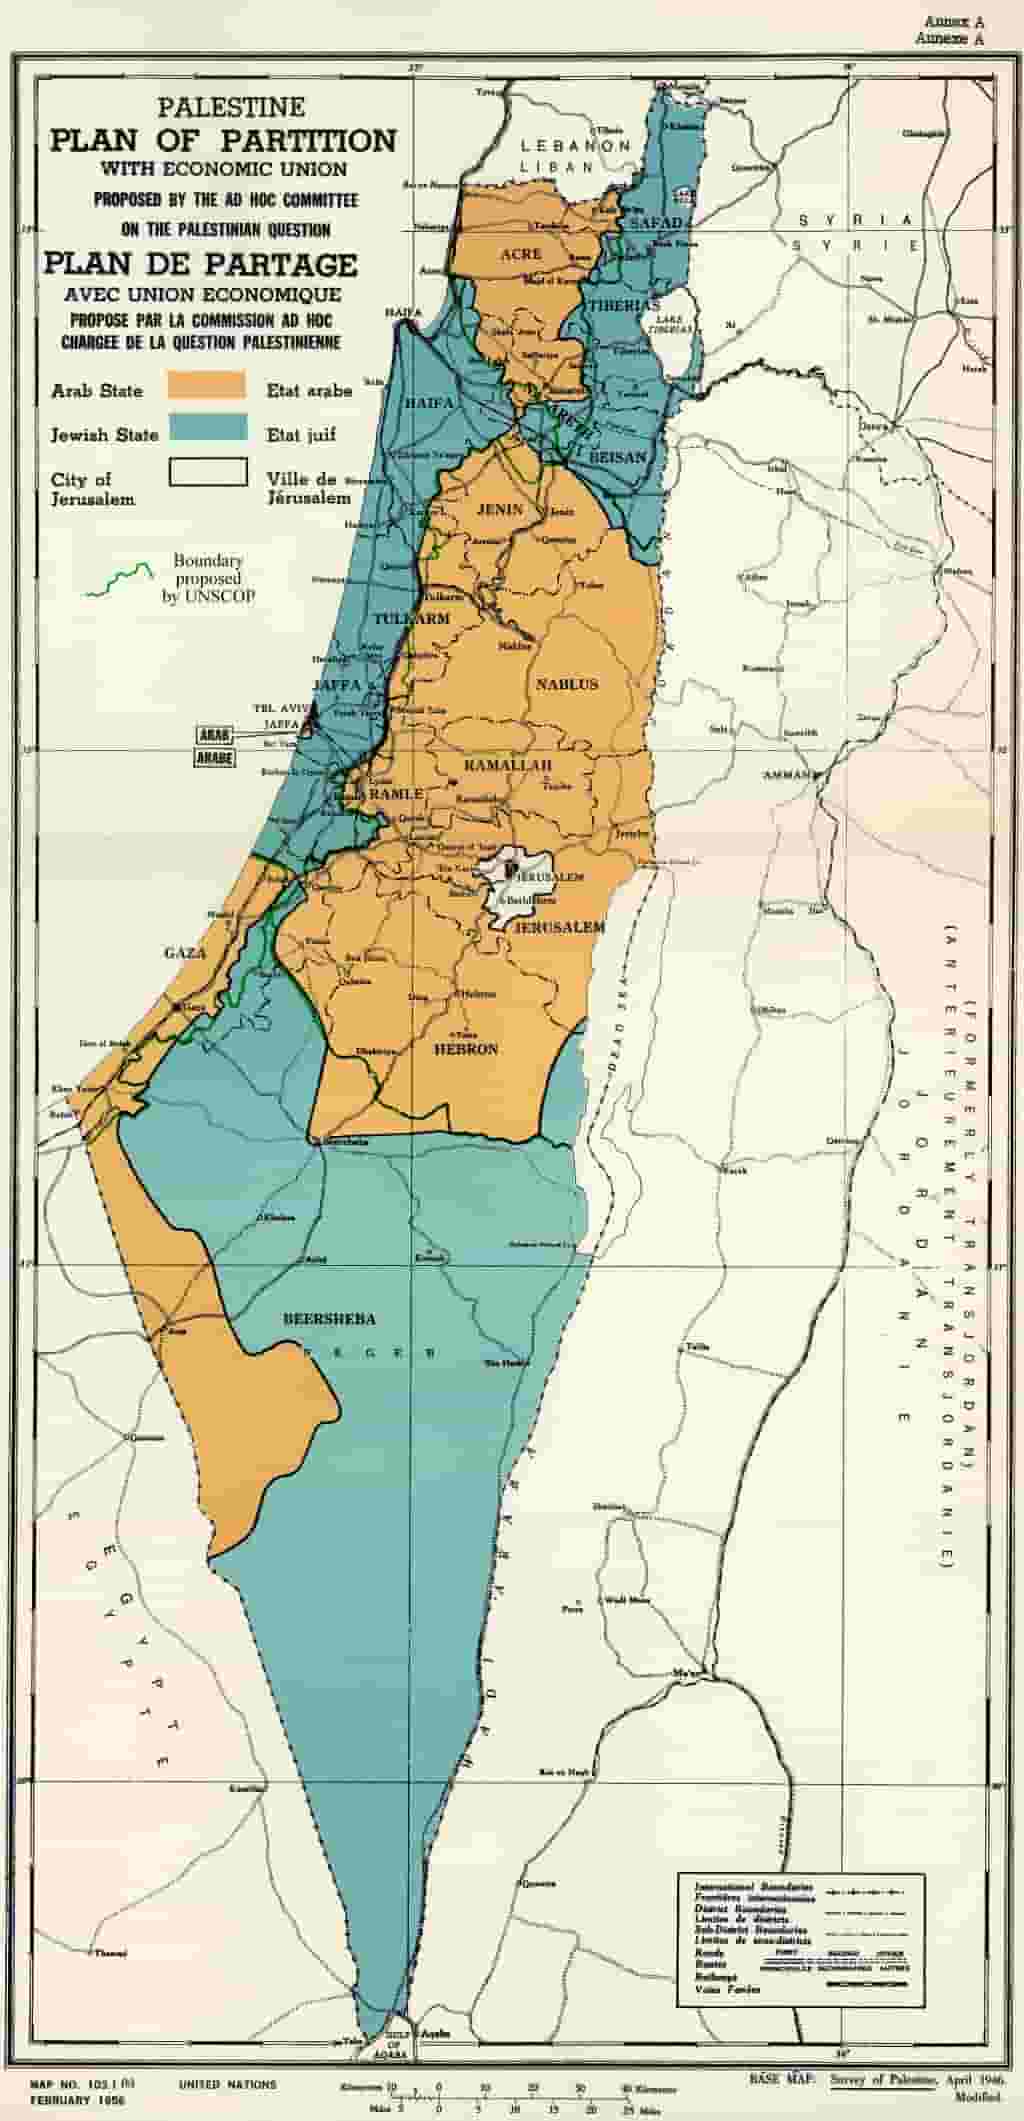 UN_Palestine_Partition_Versions_1947 Anniversary of November 29, 1947 